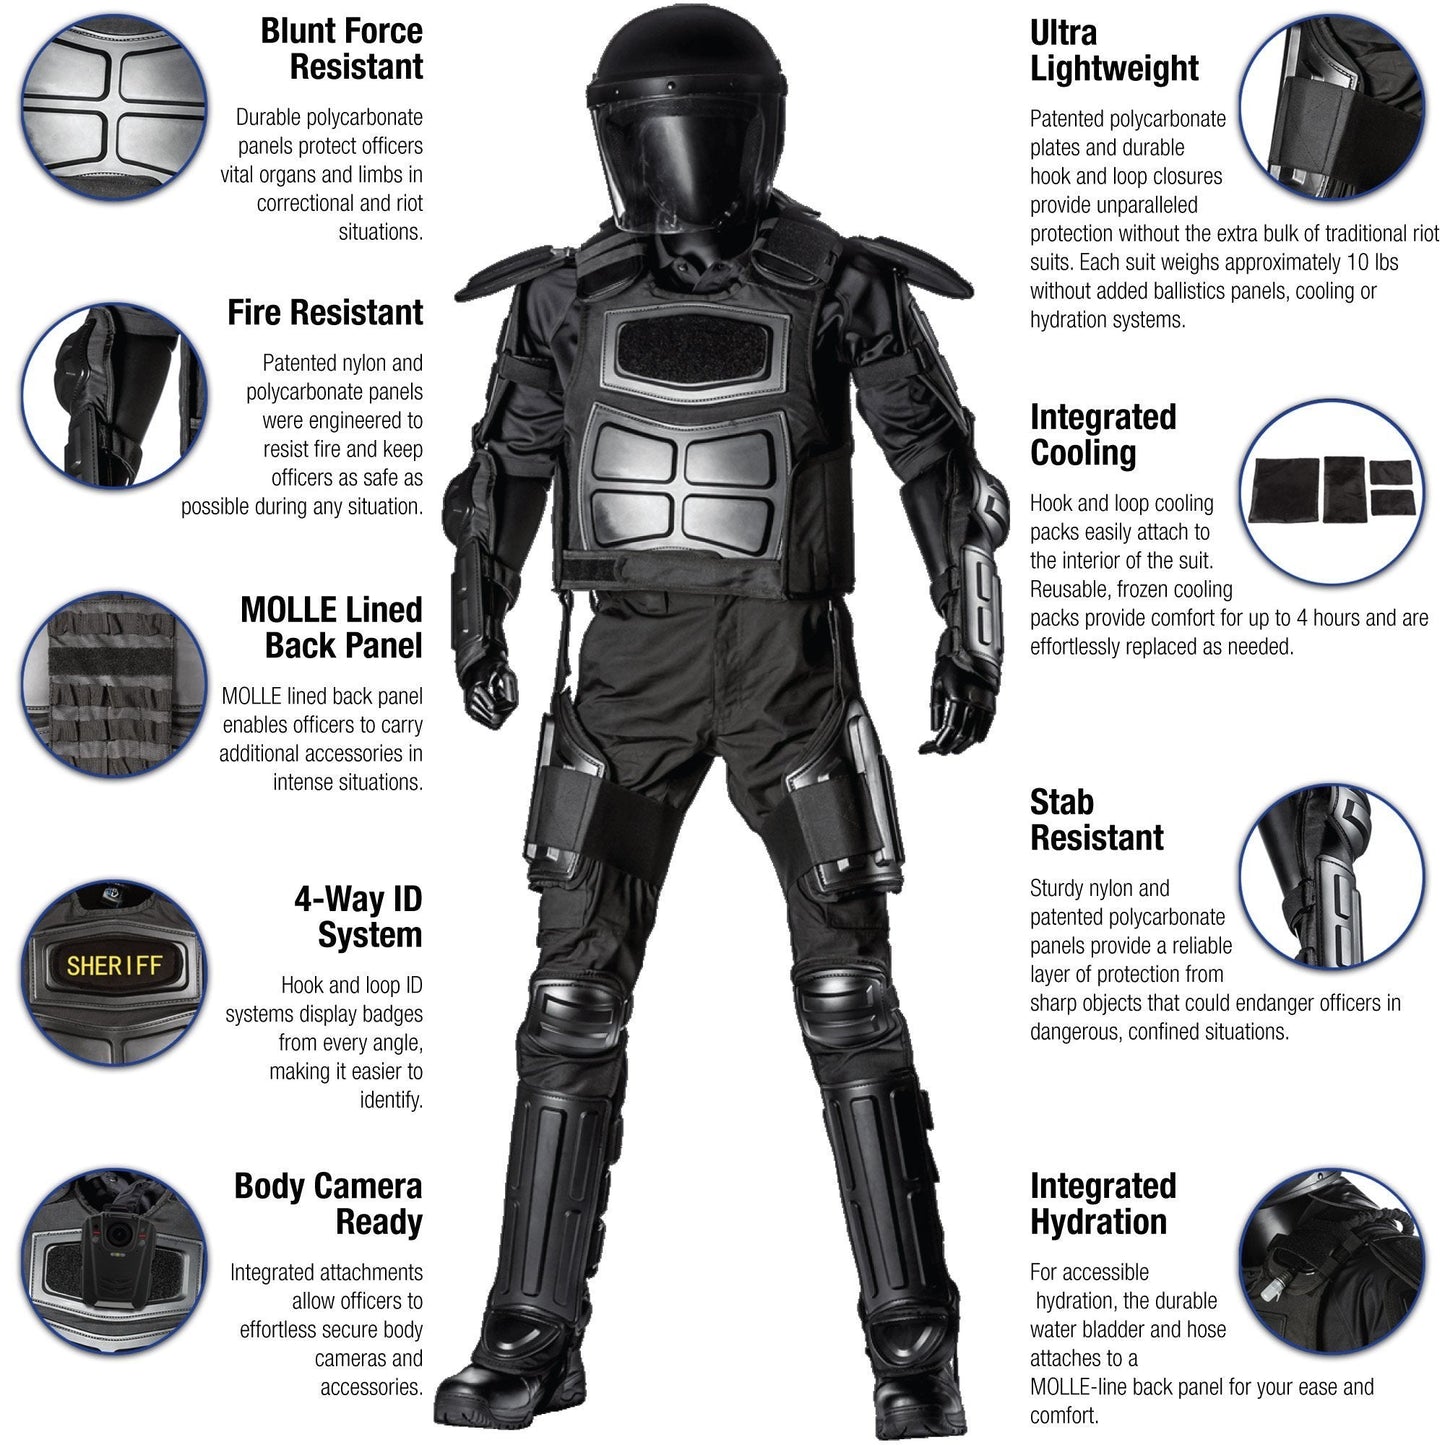 Haven Gear Enforcer Riot Suit Black Tactical Distributors Ltd New Zealand